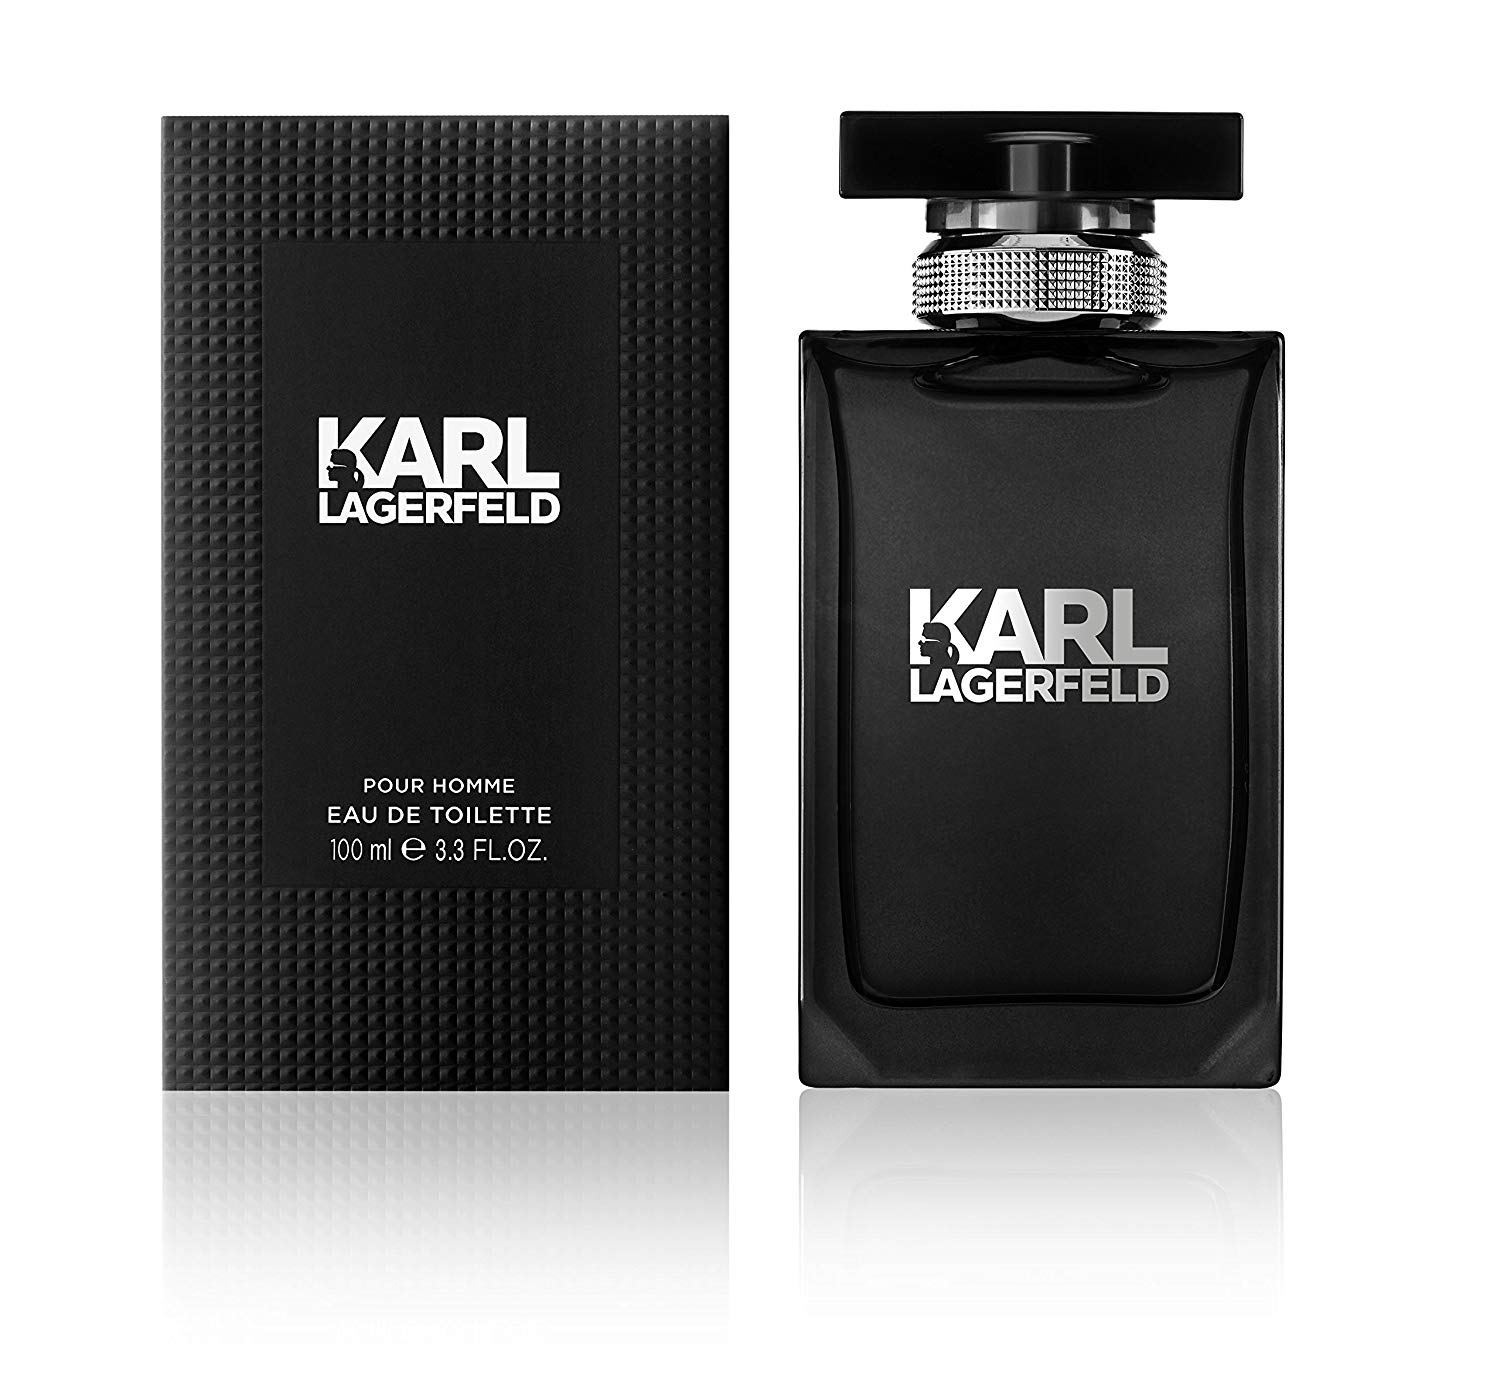 Karl Lagerfeld for Him Eau de Toilette 100ml Spray